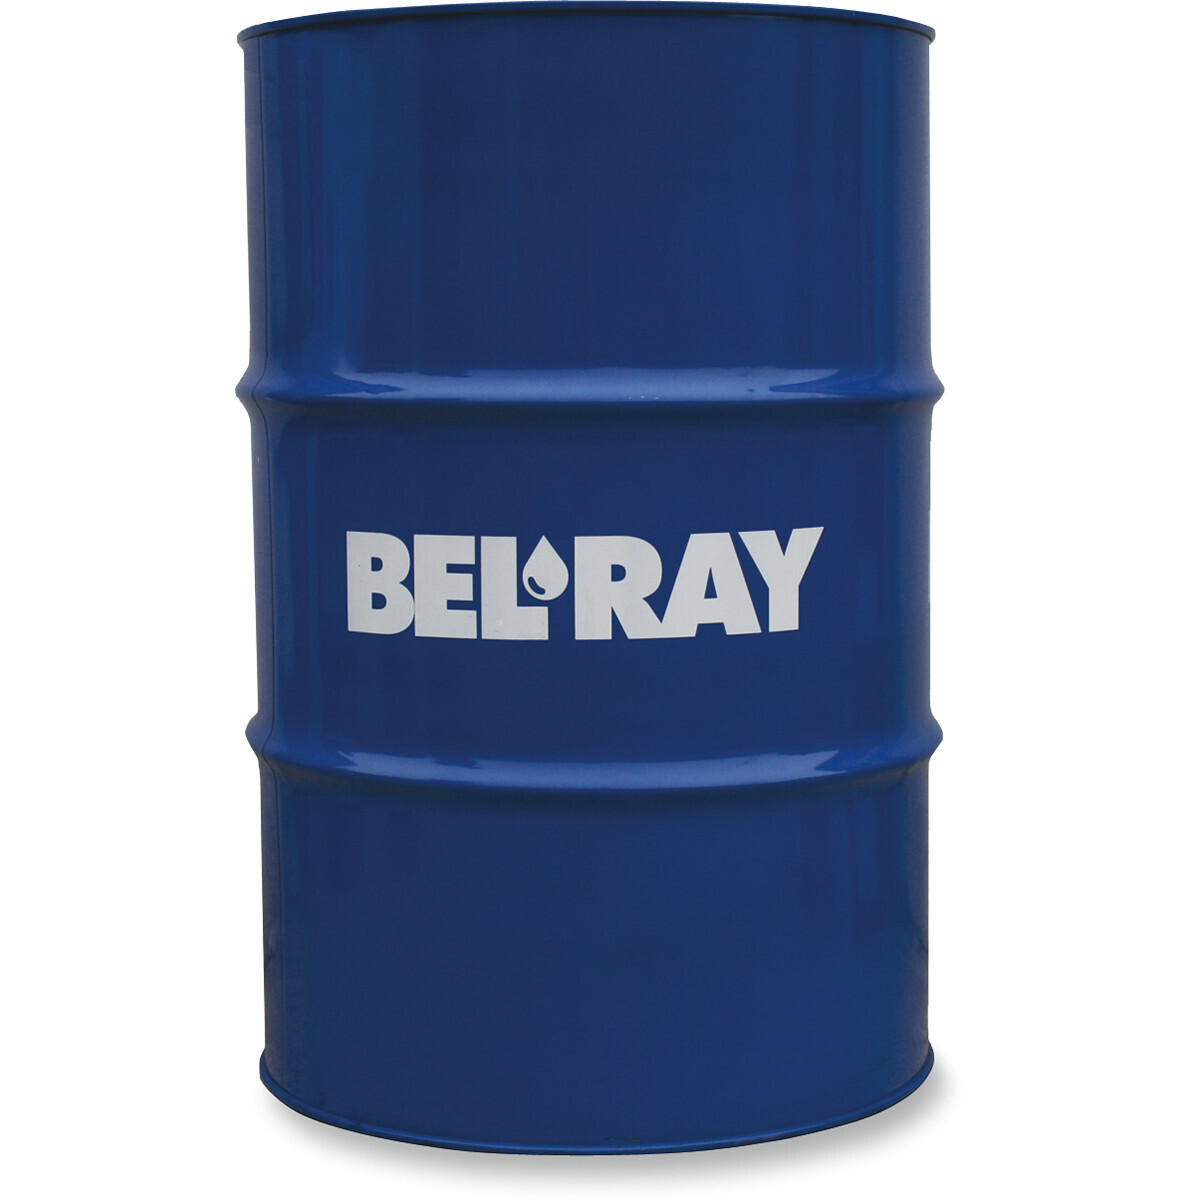 BEL-RAY
EXP SEMI-SYNTHETIC ESTER BLEND 4-STROKE ENGINE OIL 10W-40 60 LITER